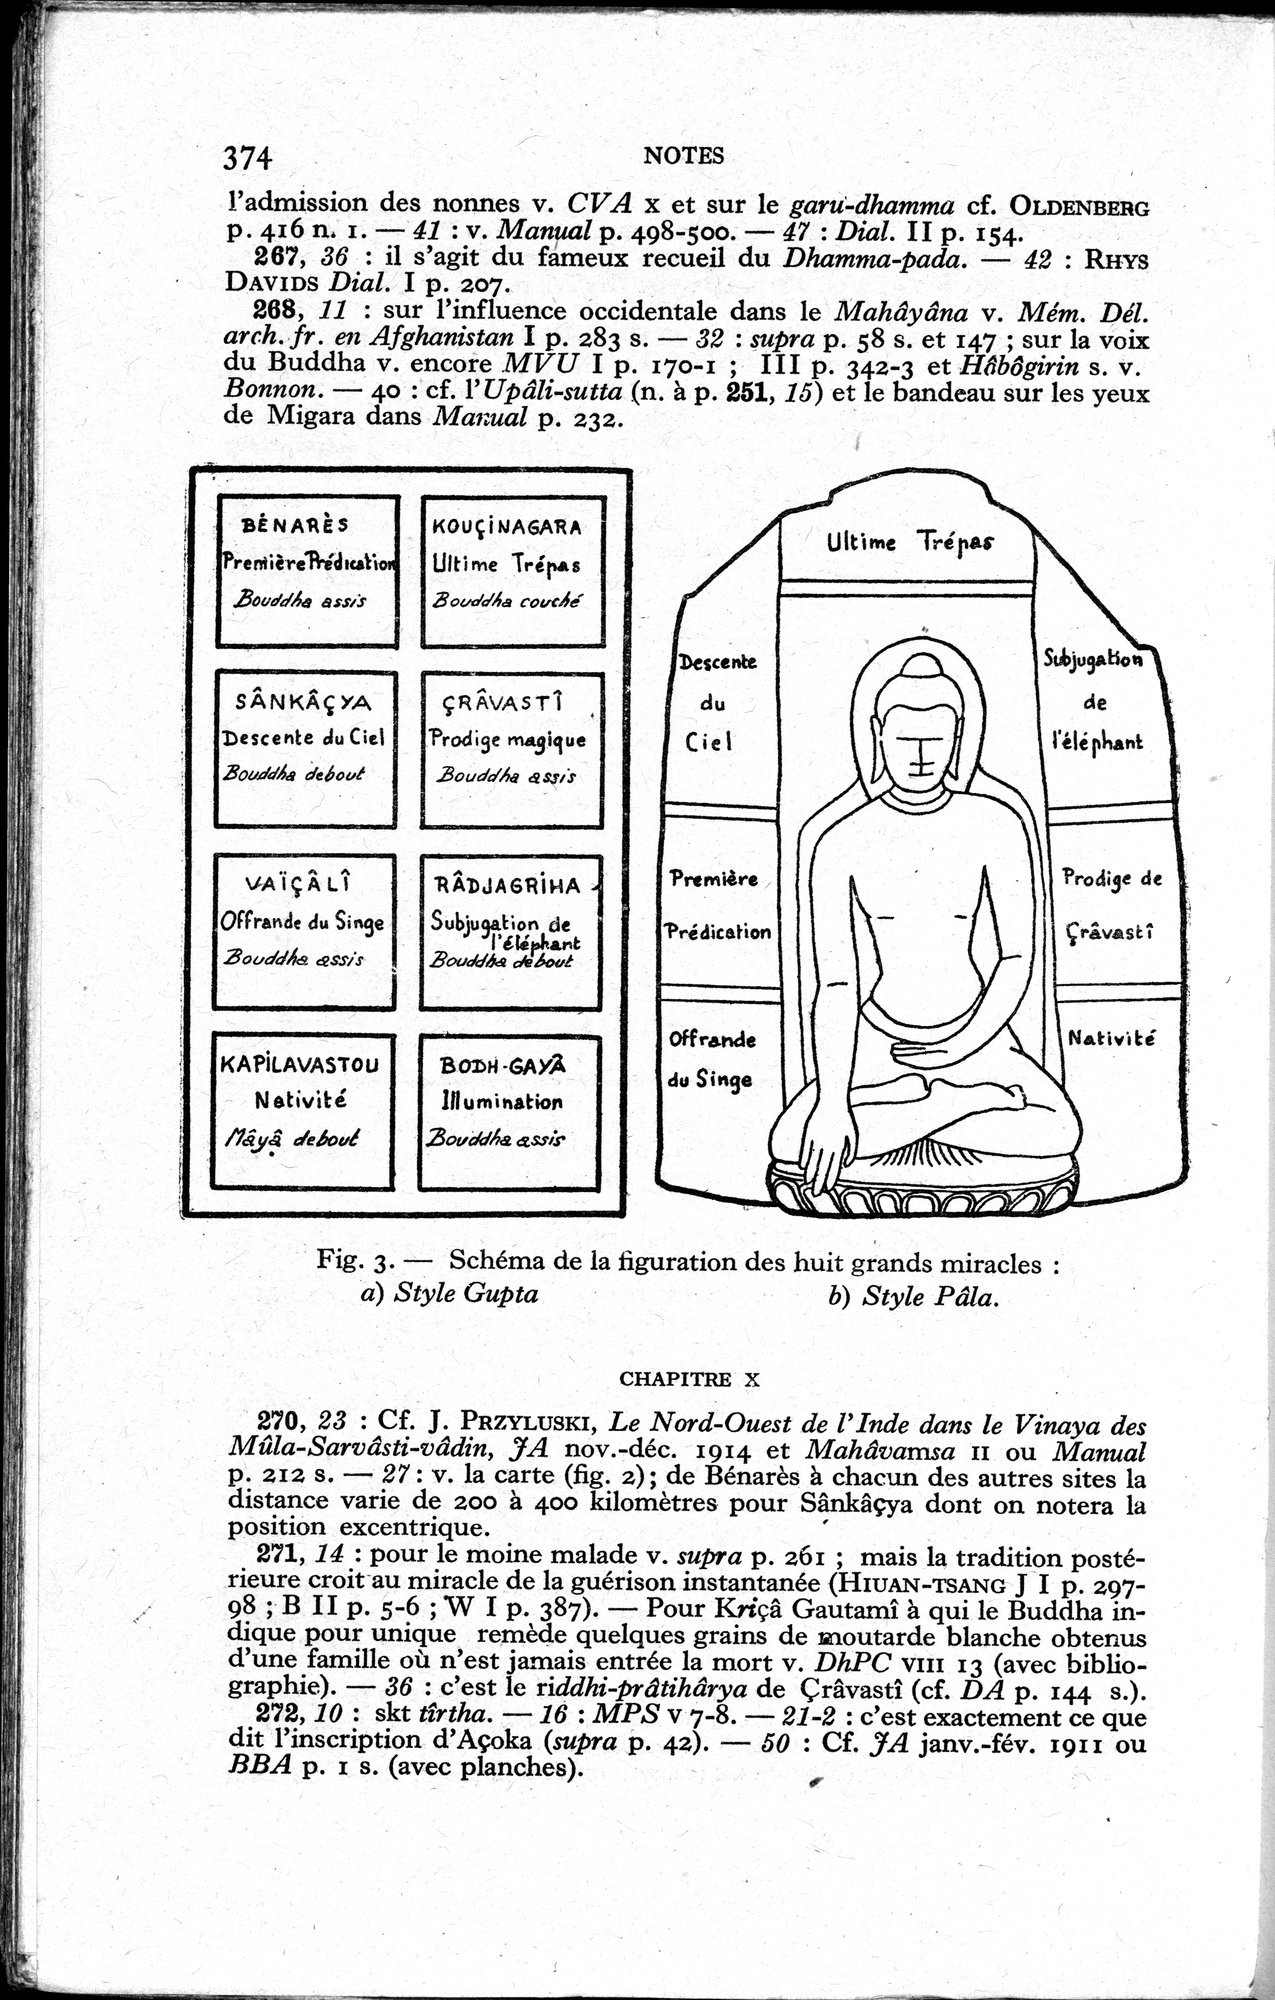 La Vie du Bouddha : vol.1 / Page 376 (Grayscale High Resolution Image)